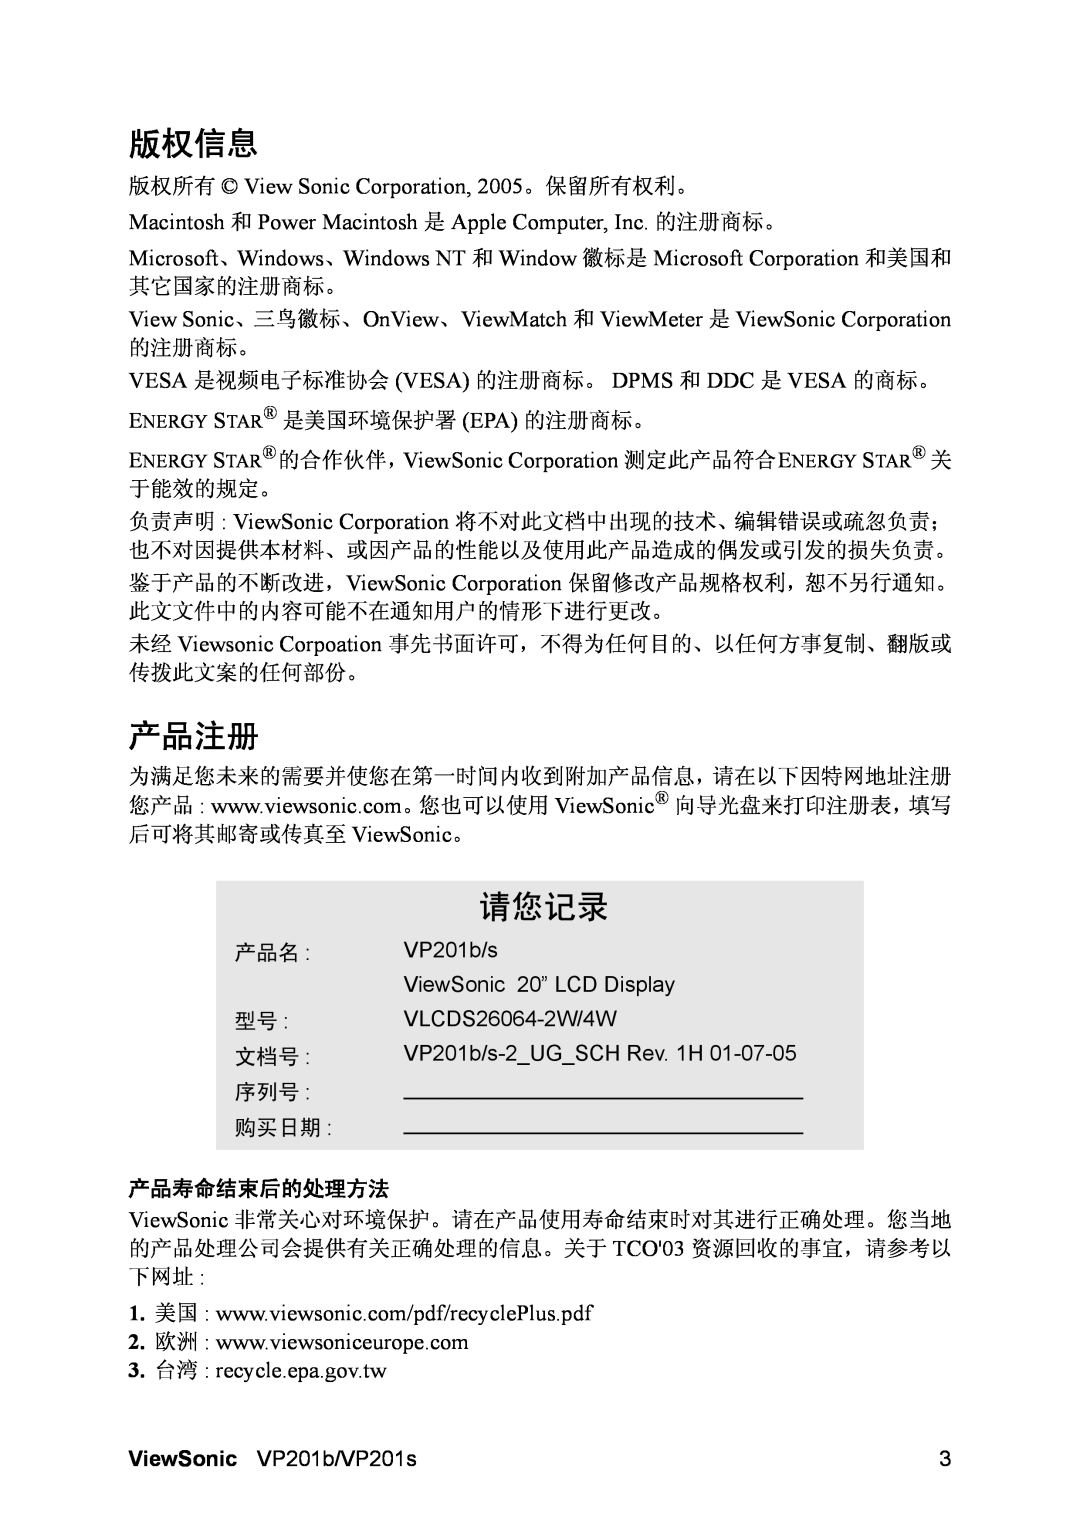 ViewSonic VP201 manual 版权信息, 产品注册, 请您记录, 3. 台湾 recycle.epa.gov.tw, 产品寿命结束后的处理方法 